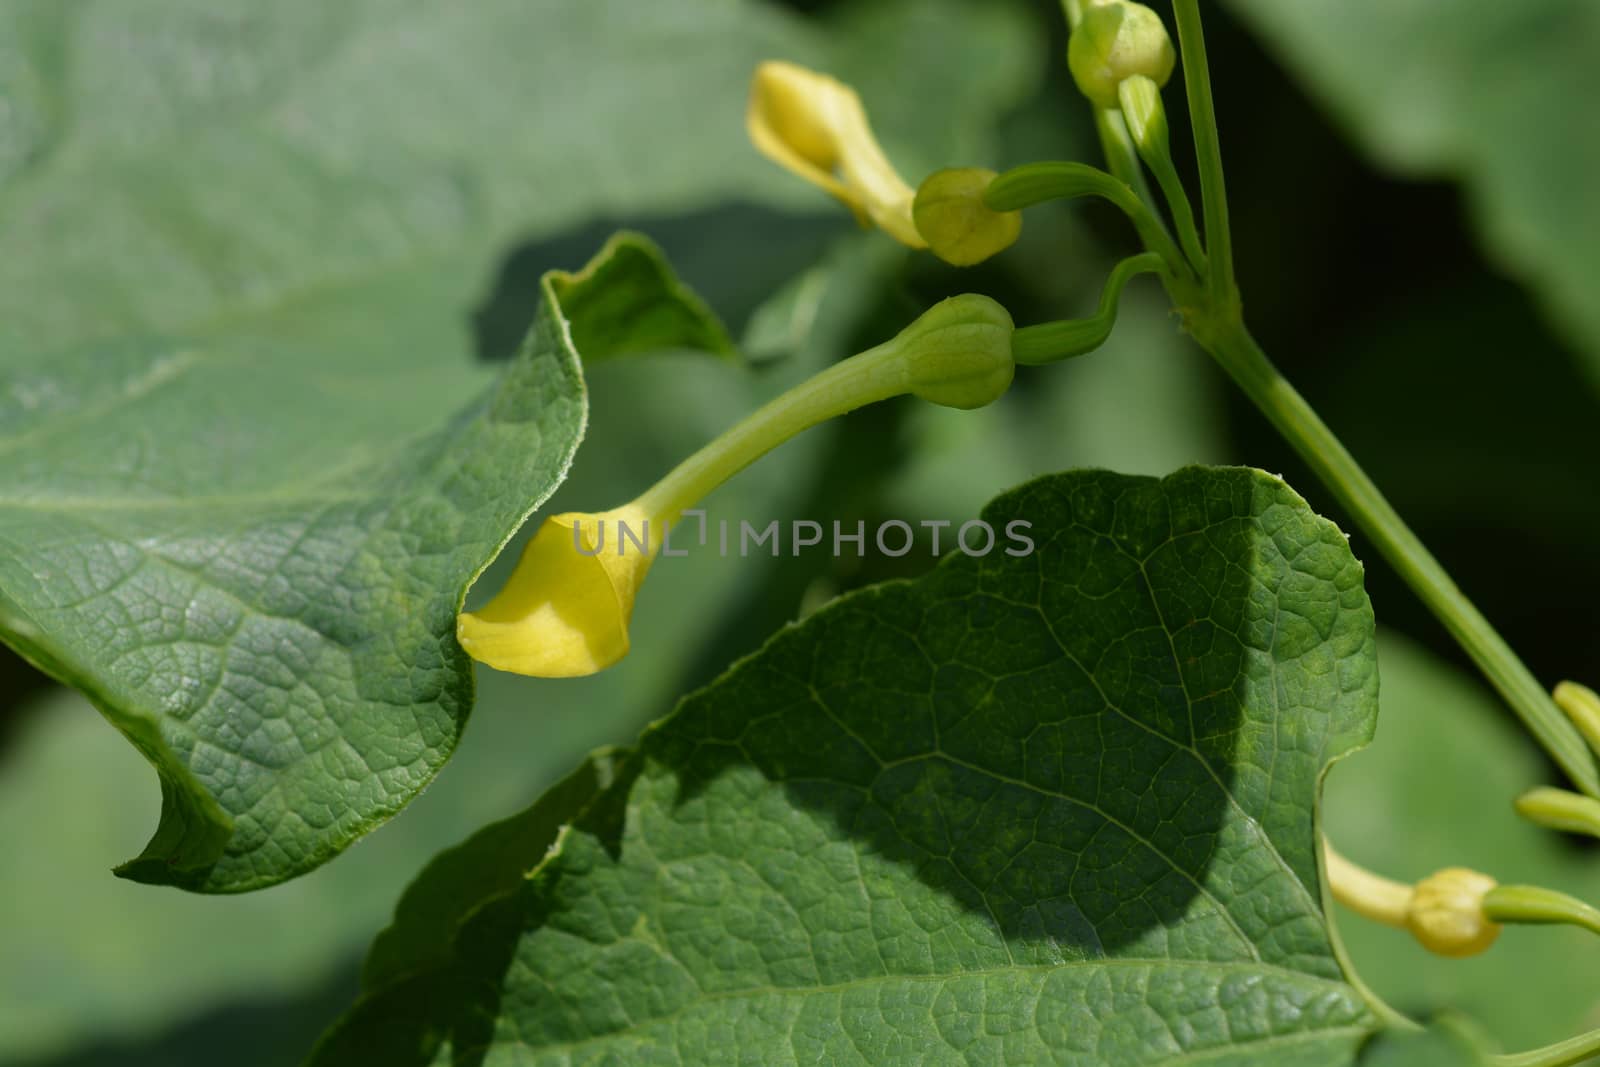 Common birthwort - Latin name - Aristolochia clematitis